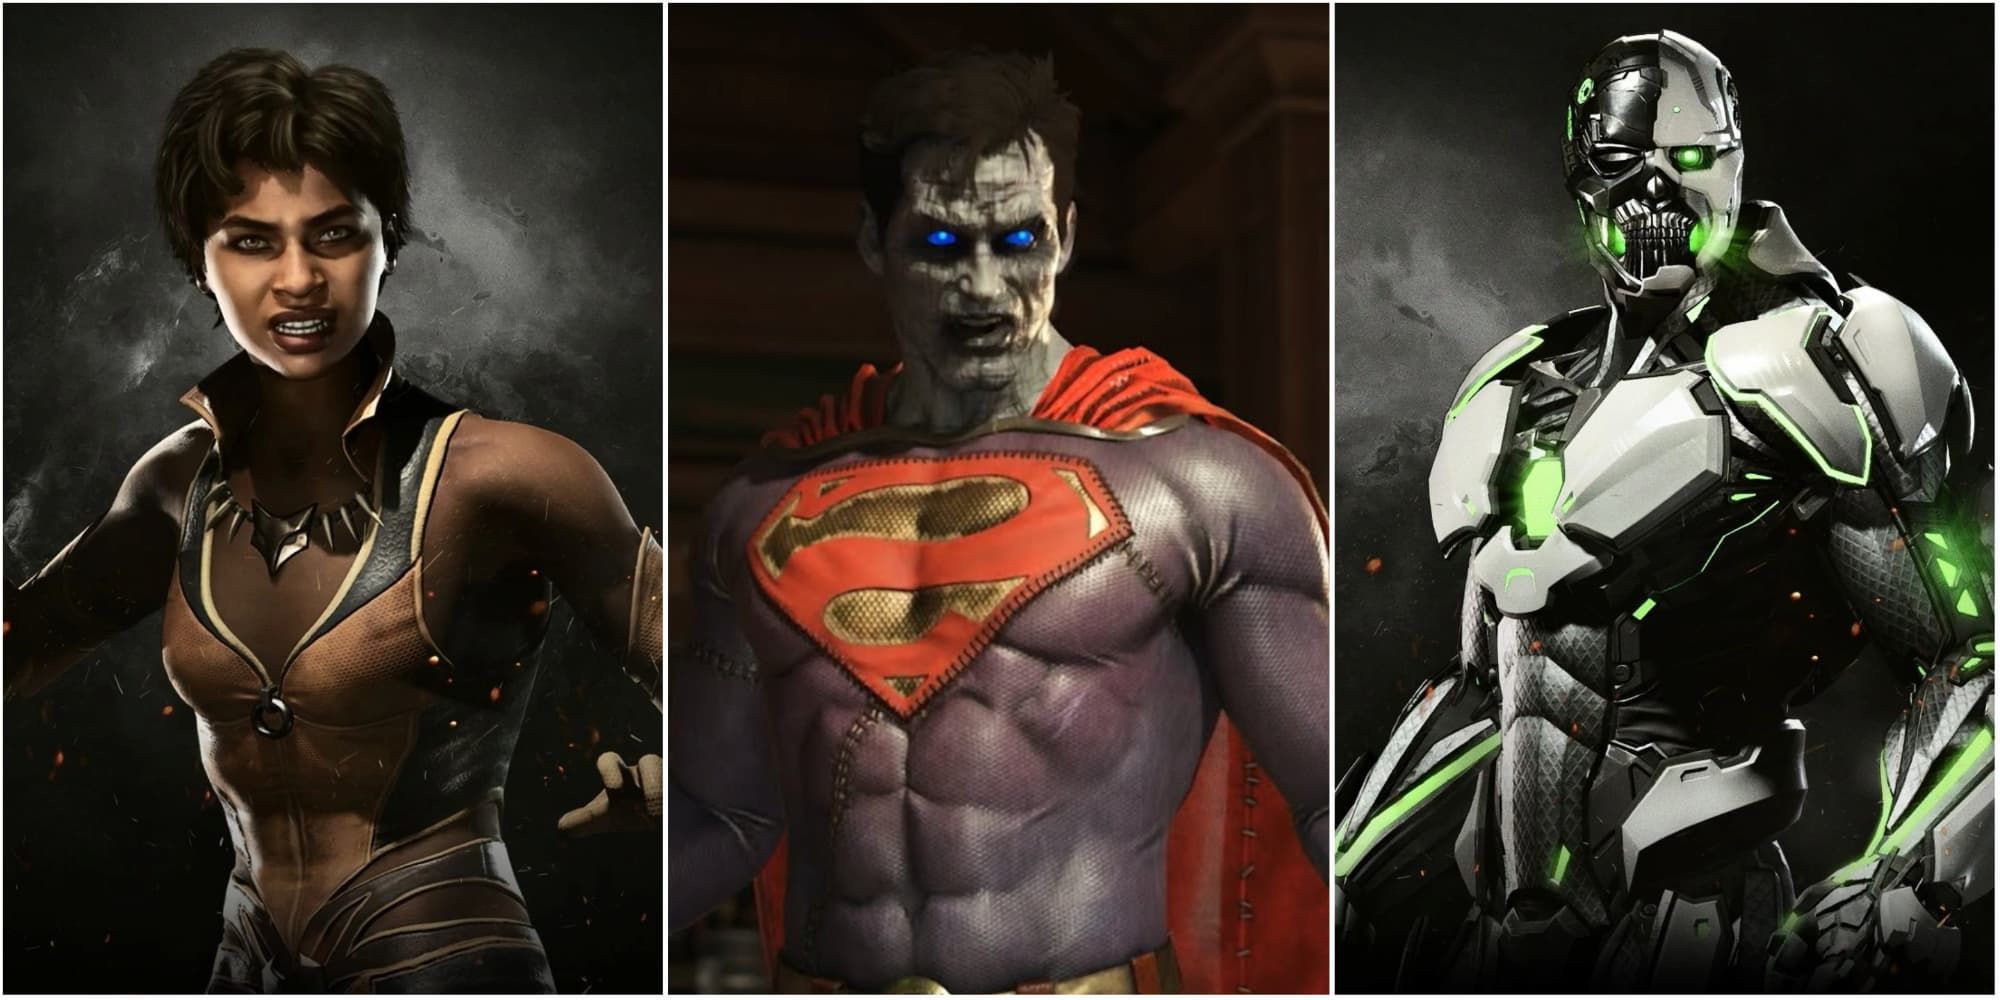 Vixen, Bizarro, and Grid are three of the Premier Skins in Injustice 2.